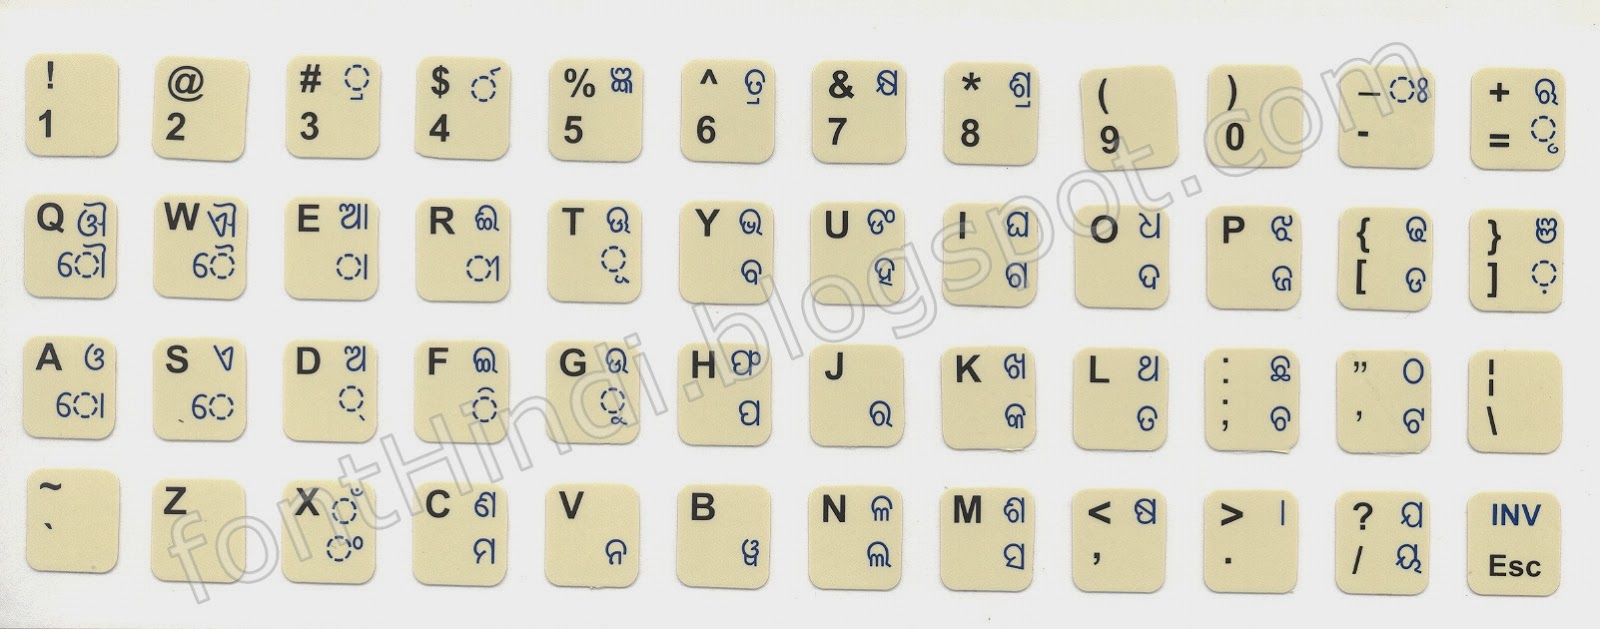 Sinhala font keyboard layout - vivakurt